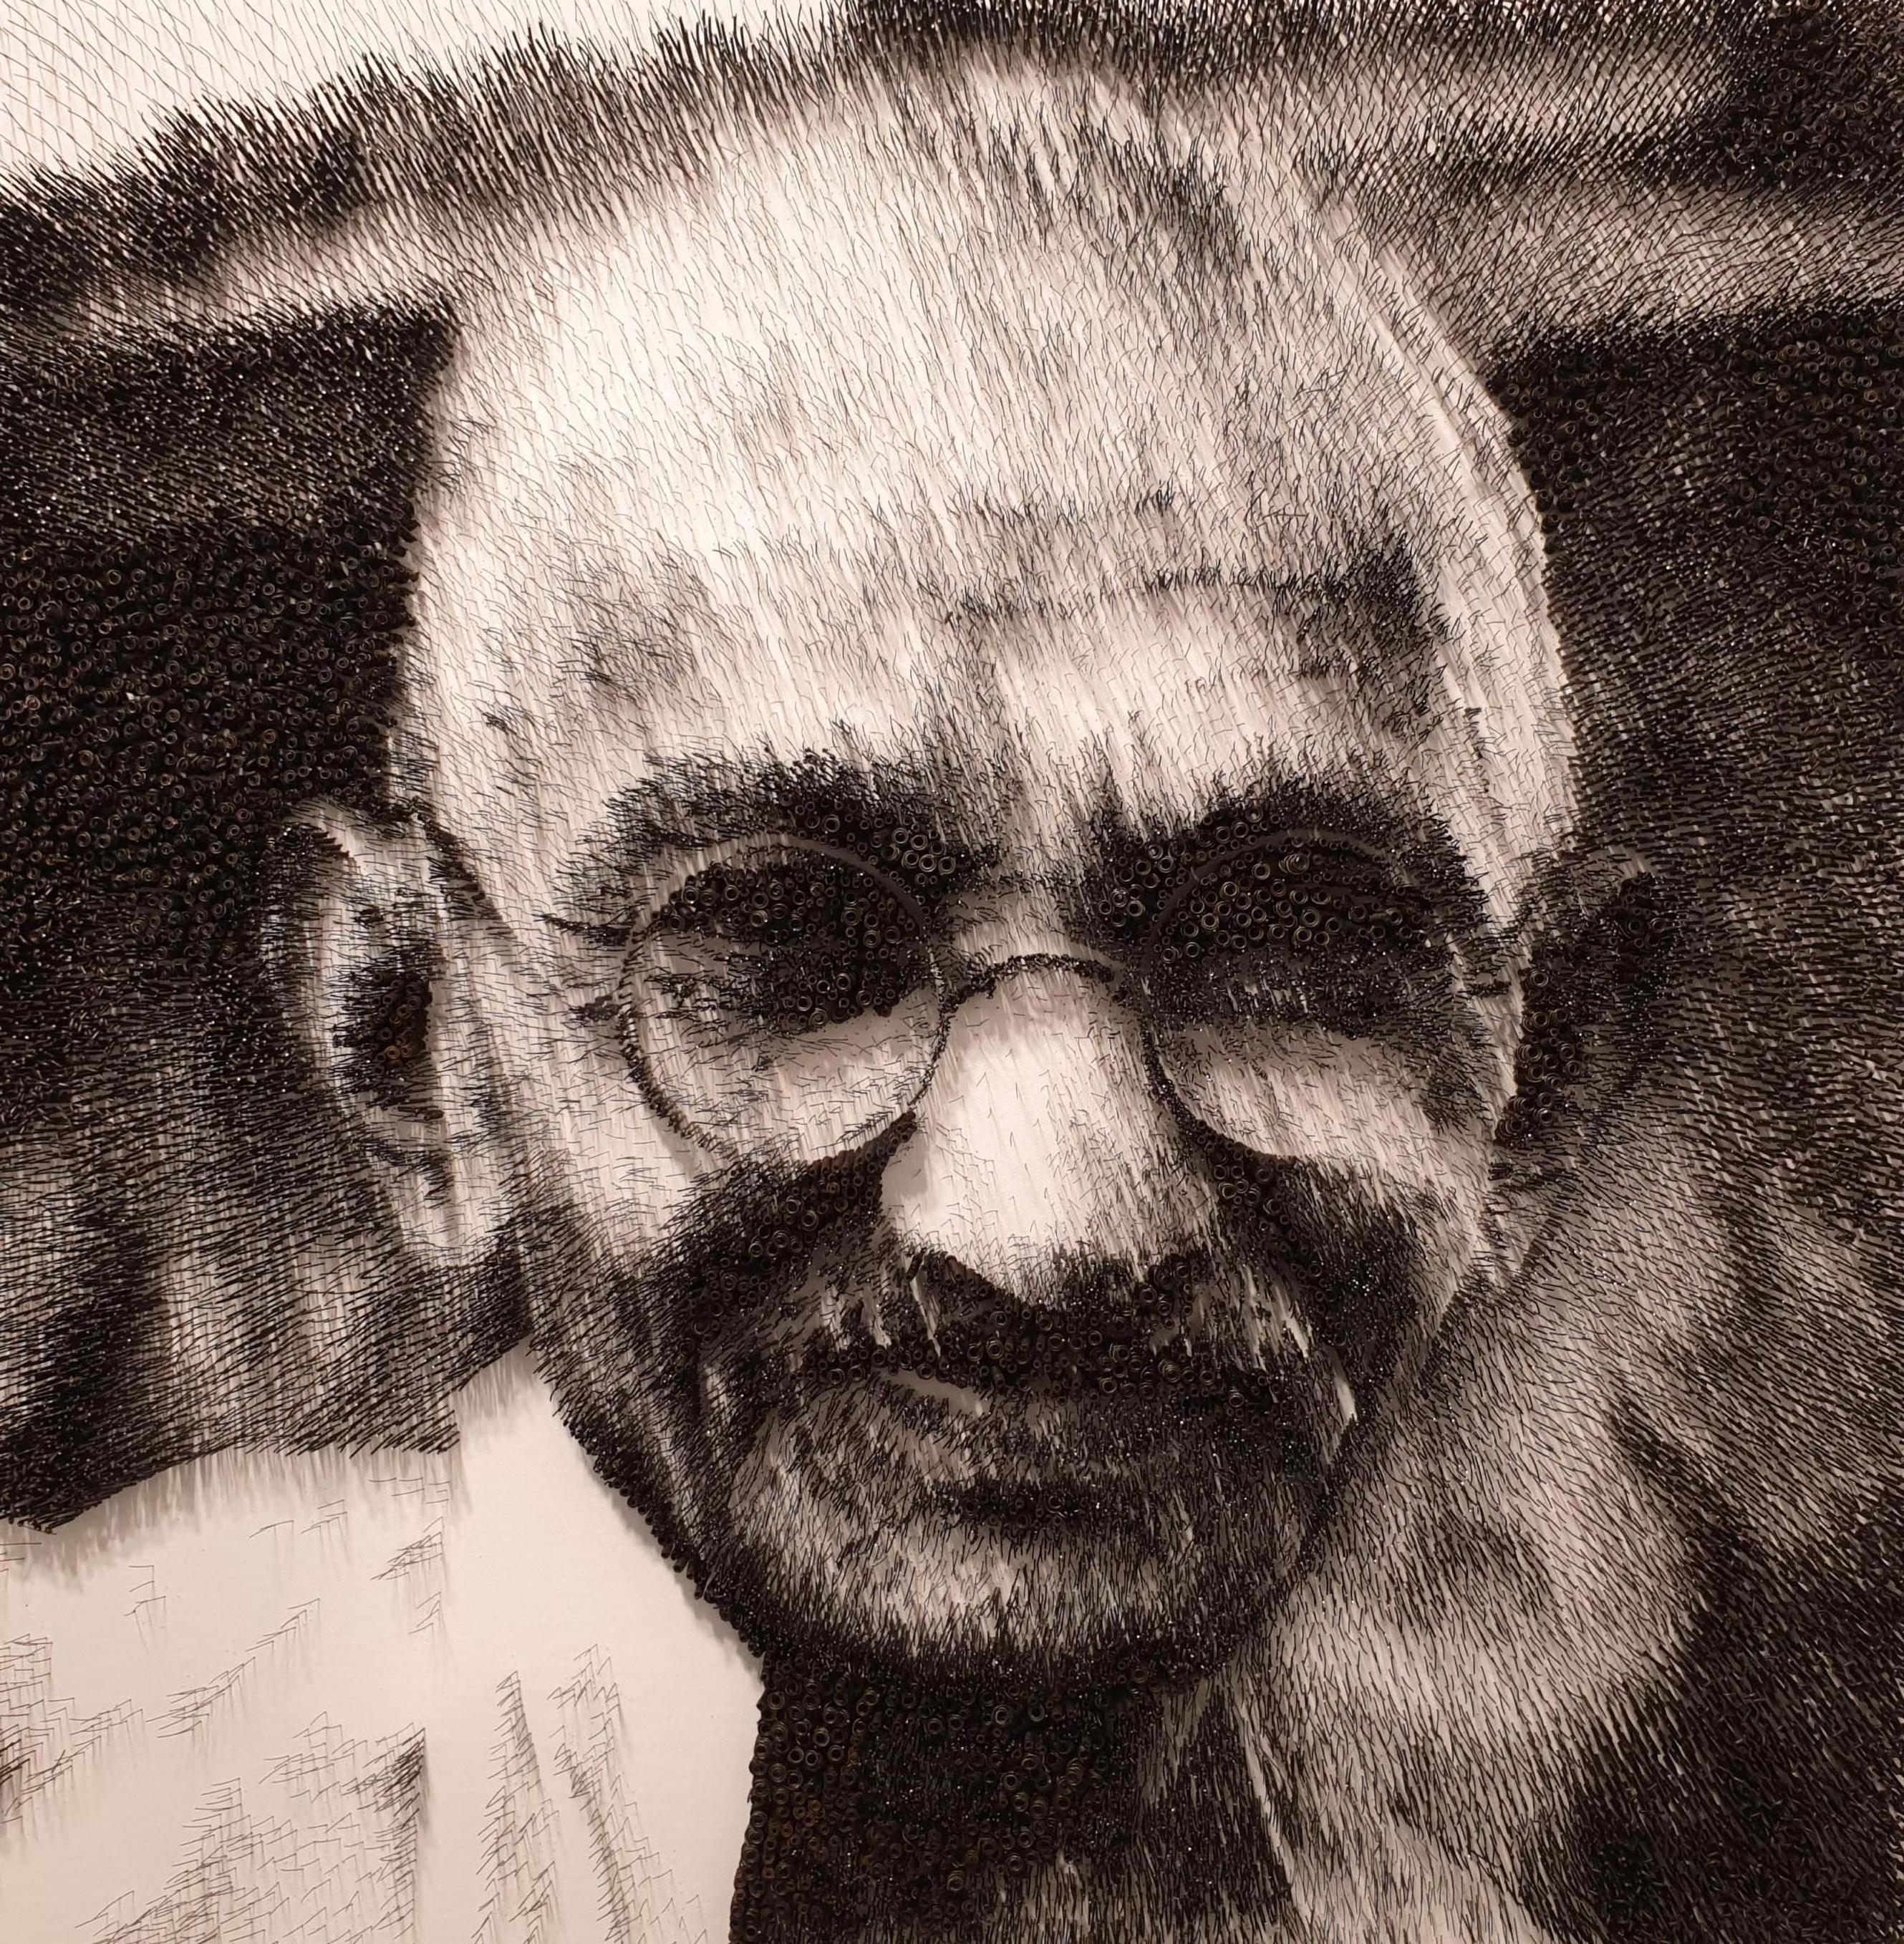 Mohandas Gandhi[Black&White, Steel on canvas, Stereoscopic, Portrait, New media]